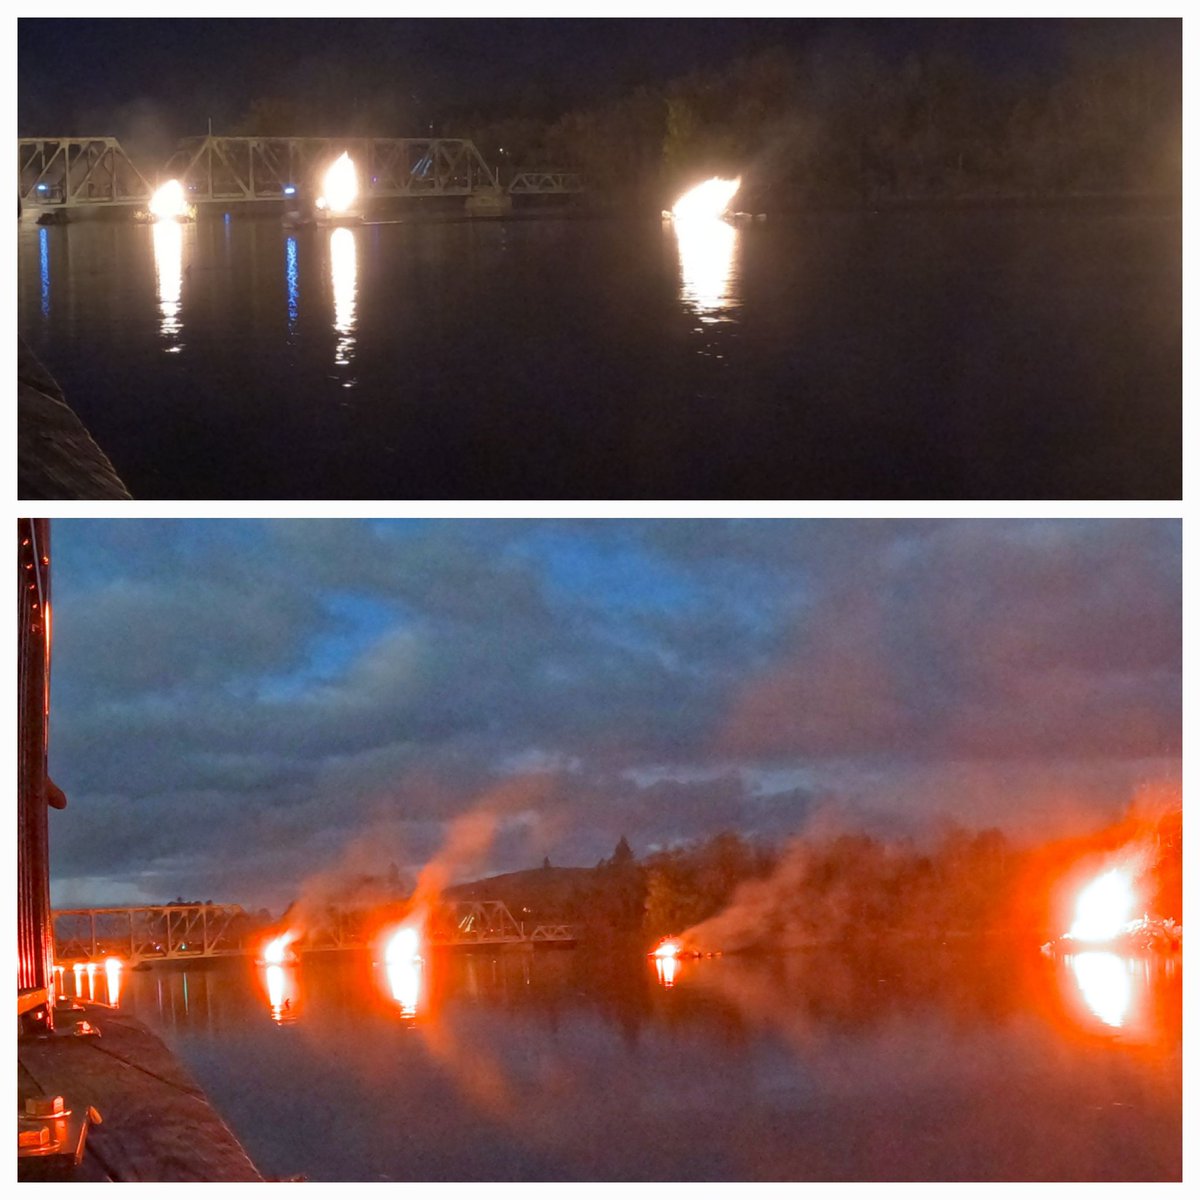 RiverFire time lapse photos (upper 2min & lower 16min) @berlinnh #GoPro #enjoylife